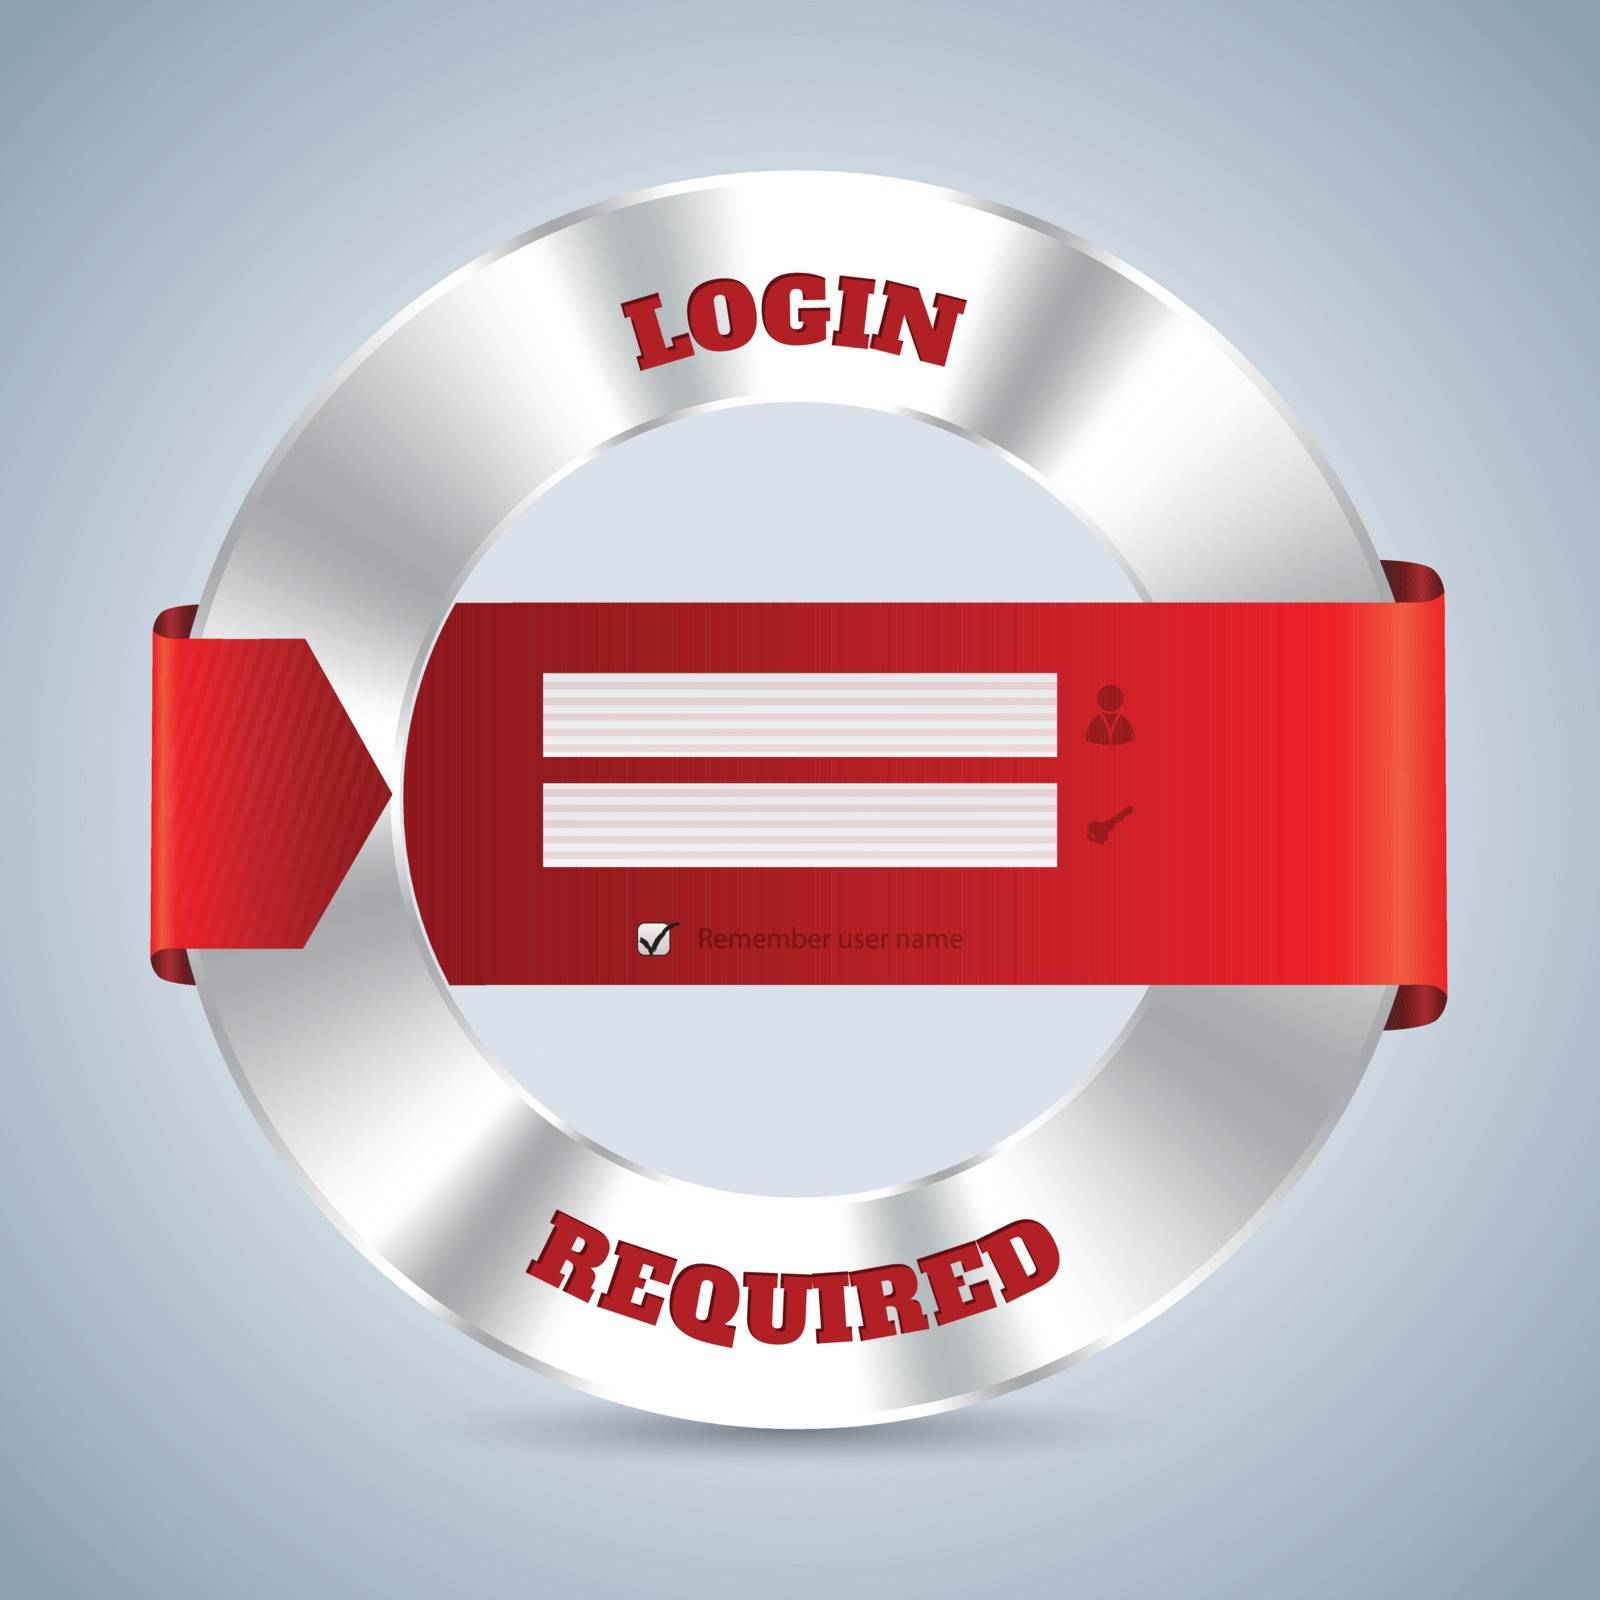 Metallic access login screen with red ribbon design